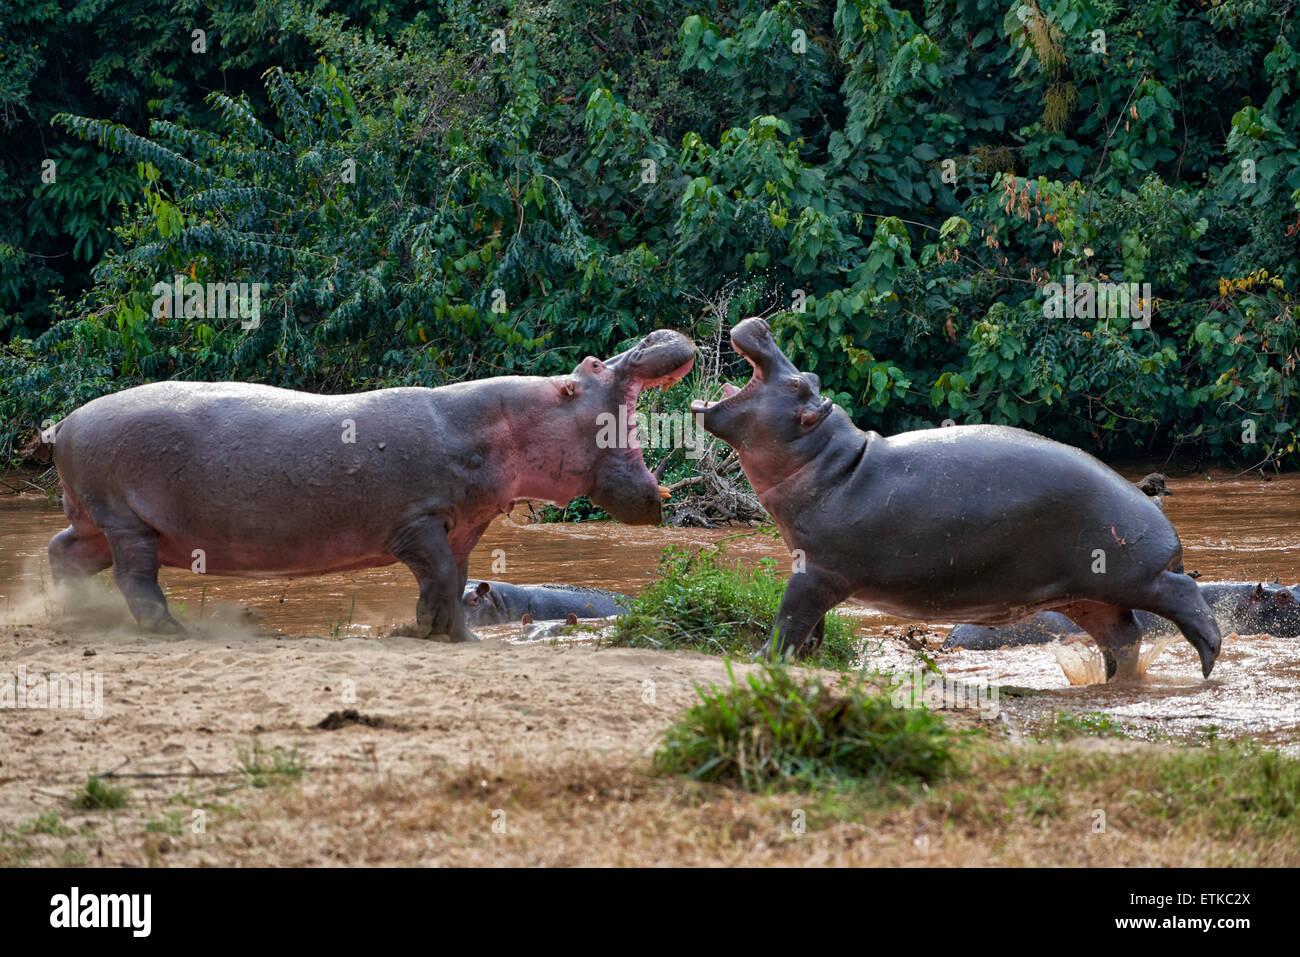 Combats d'hippopotame, Hippopotamus amphibius, Secteur Ishasha, Parc national Queen Elizabeth, l'Ouganda, l'Afrique Banque D'Images